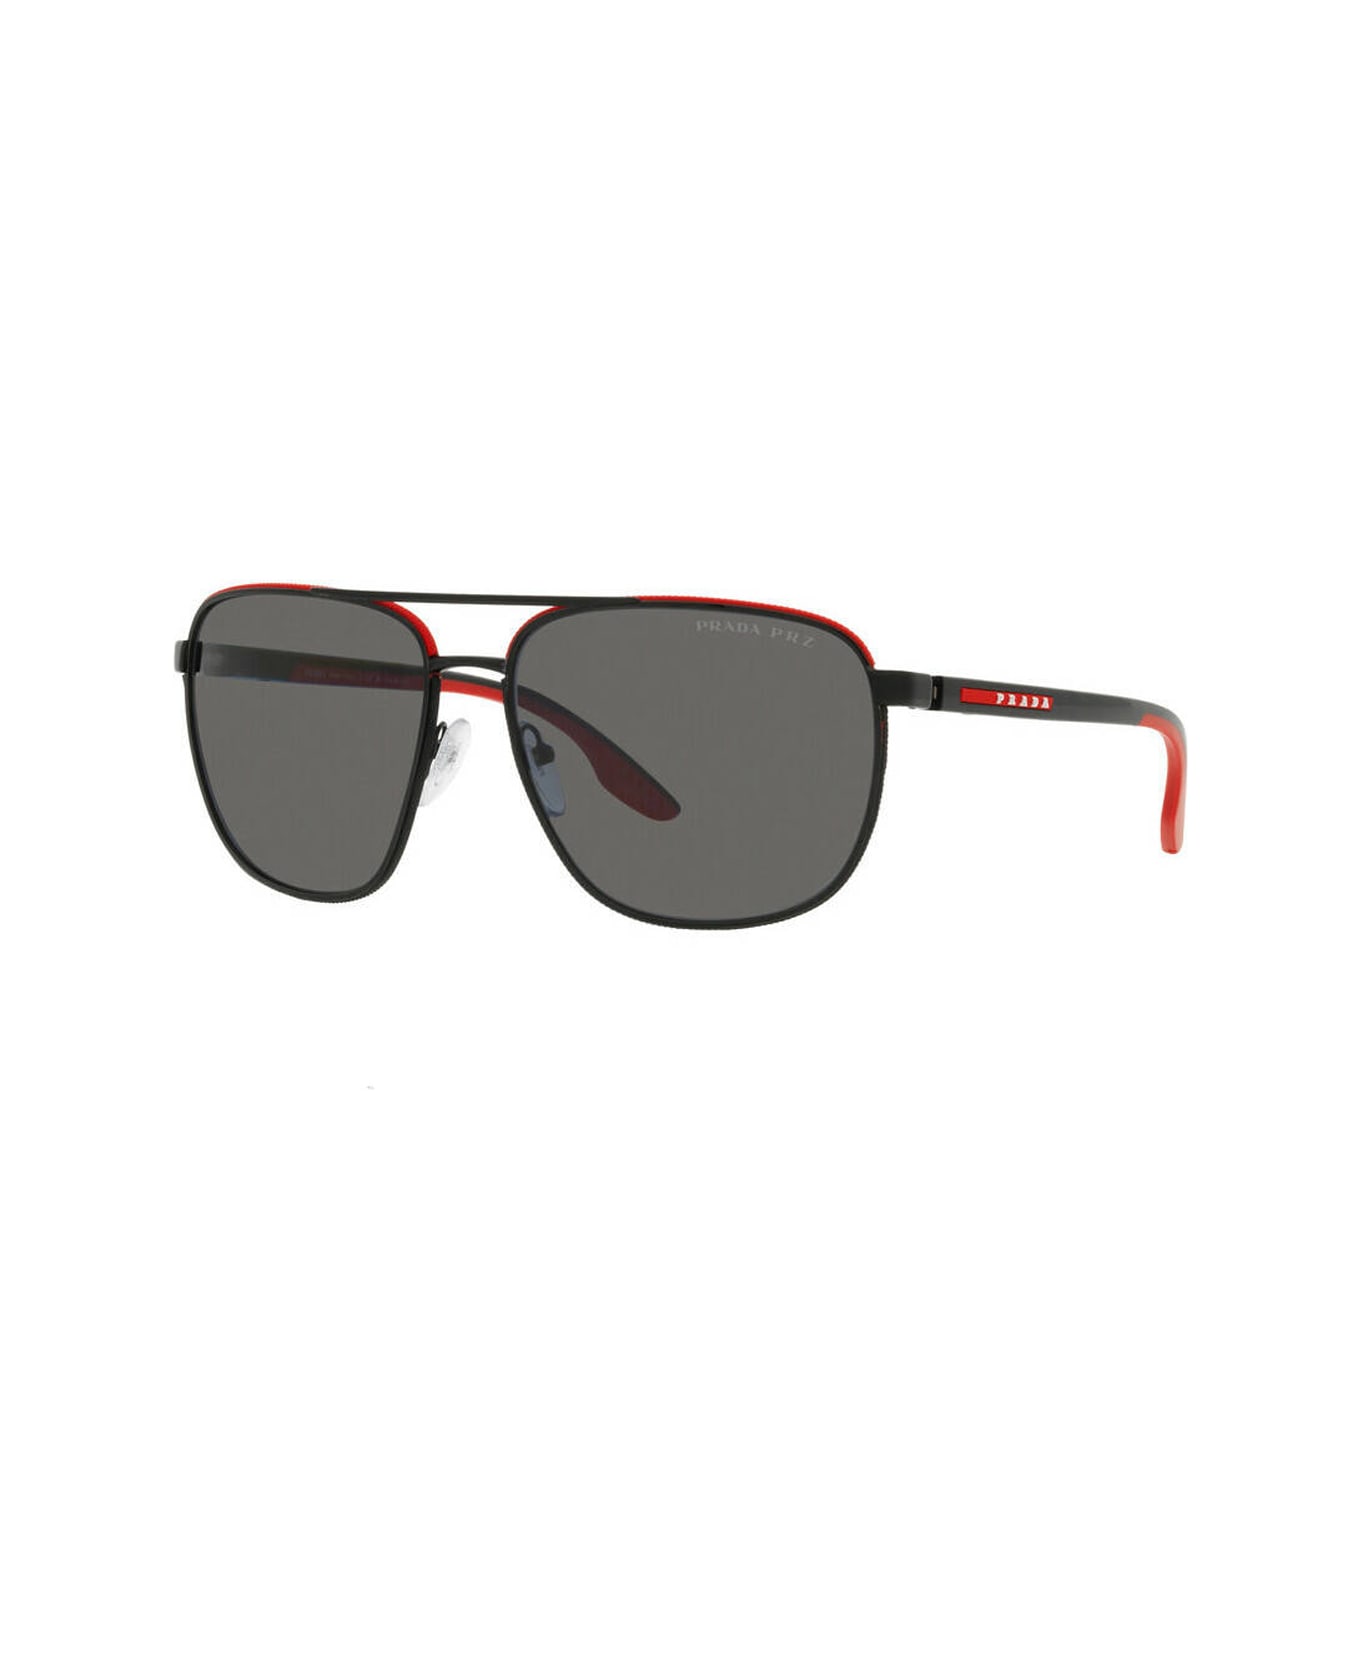 Prada Linea Rossa Ps 50ys Sunglasses - Nero